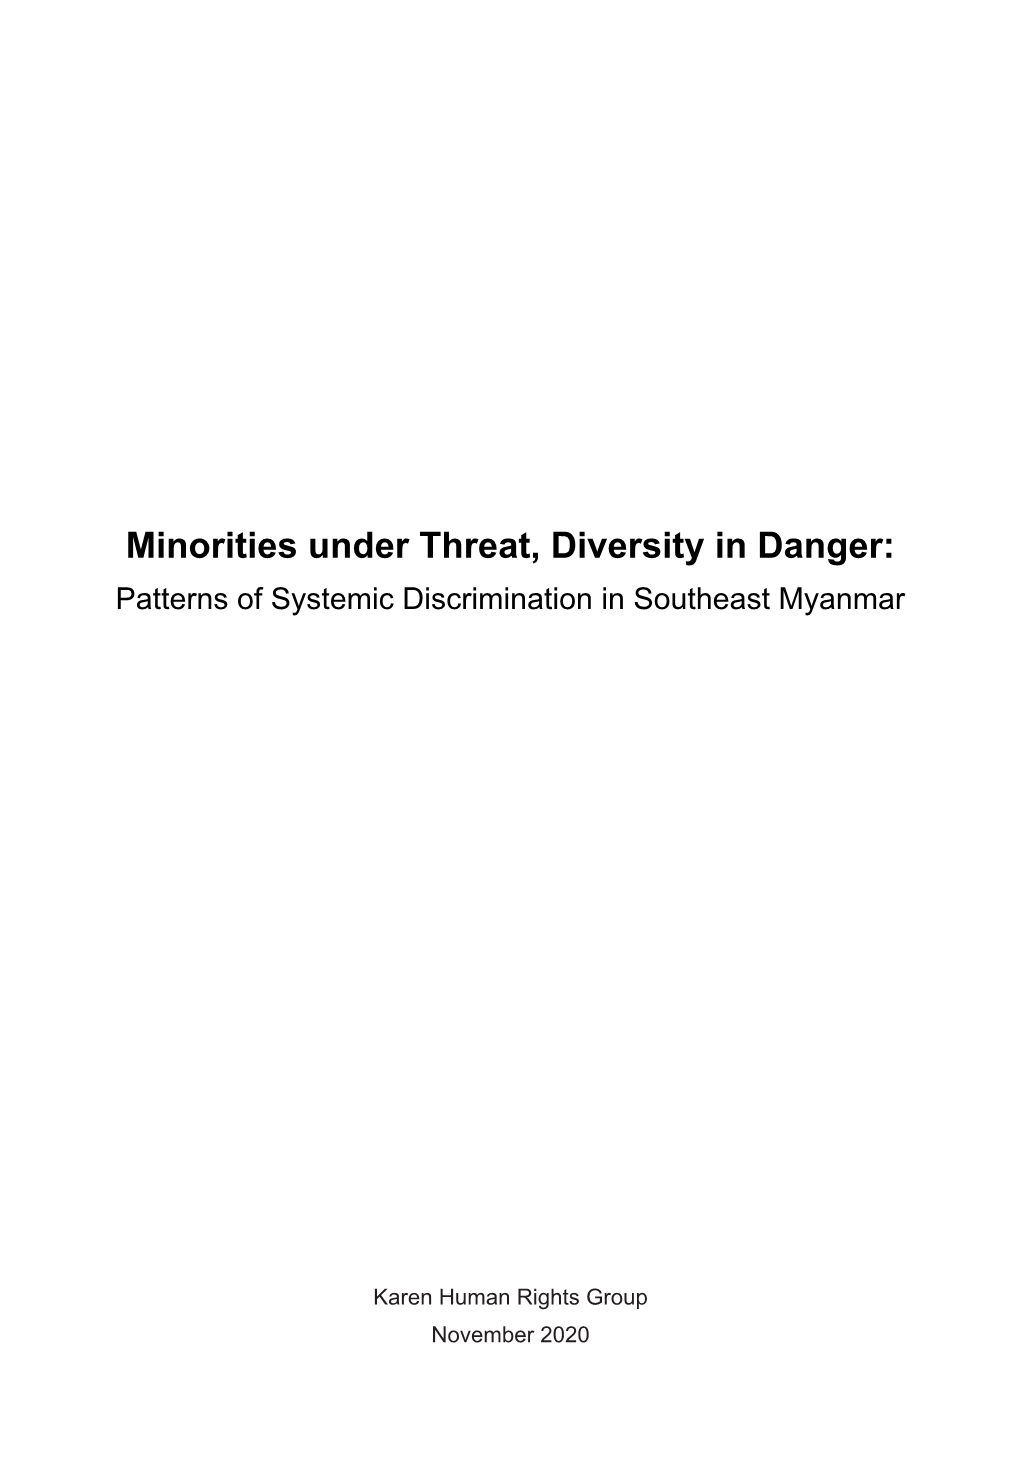 Minorities Under Threat, Diversity in Danger: Patterns of Systemic Discrimination in Southeast Myanmar